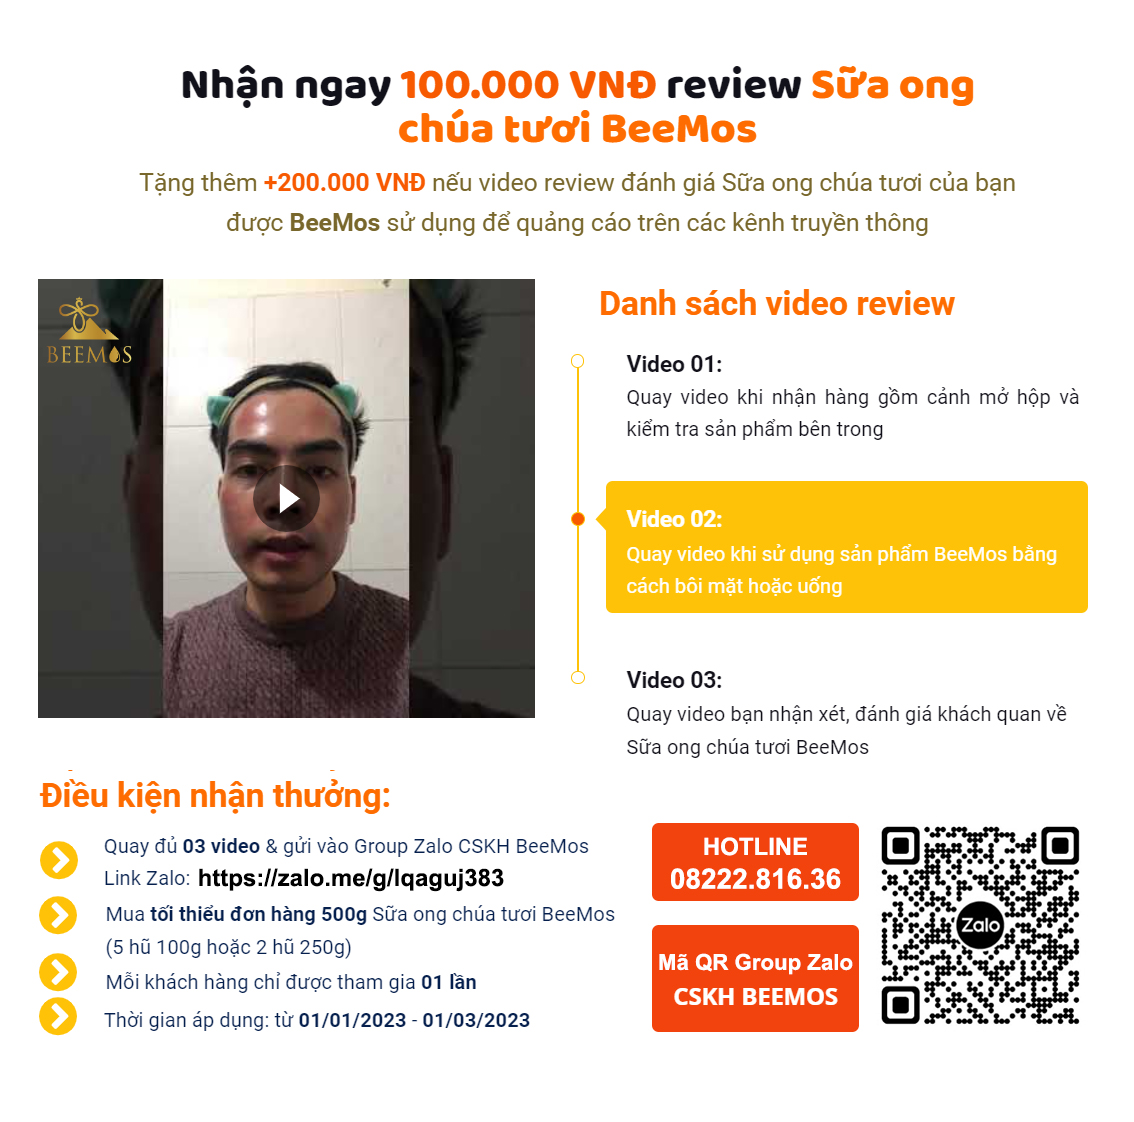 review-sua-ong-chua-tuoi-beemos-nhan-ngay-100k